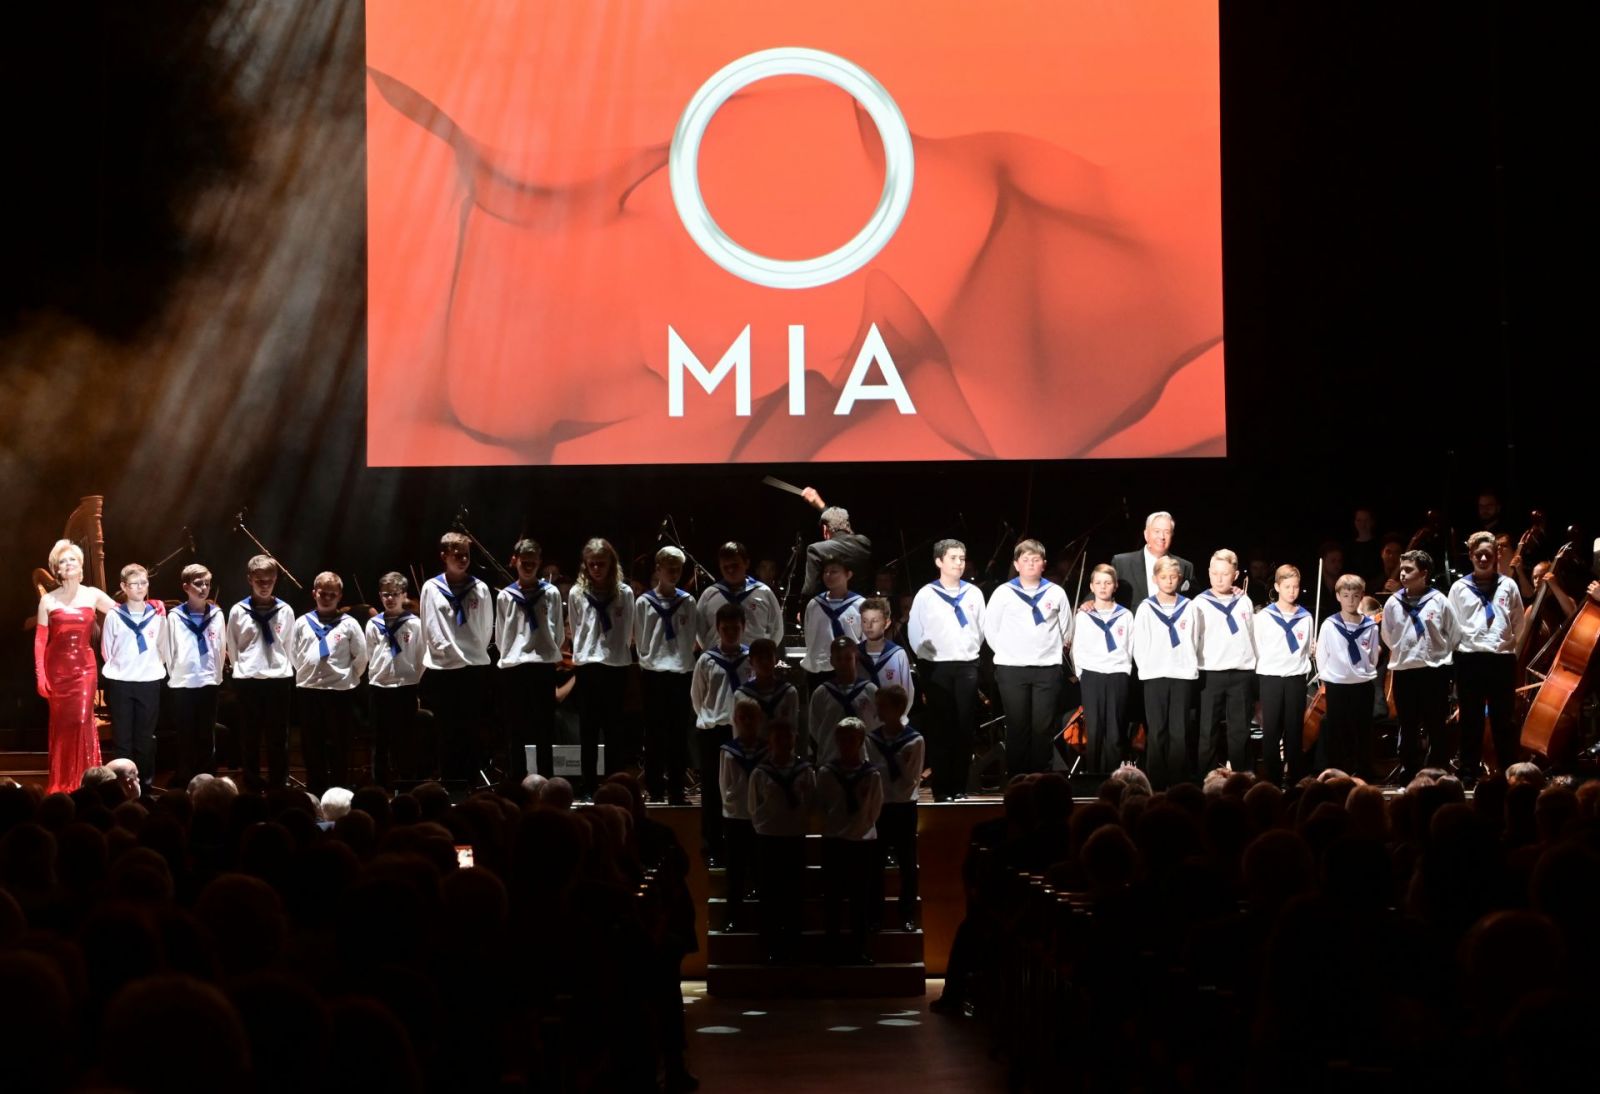 O-mia-wiener Konzerthaus 2019 -39